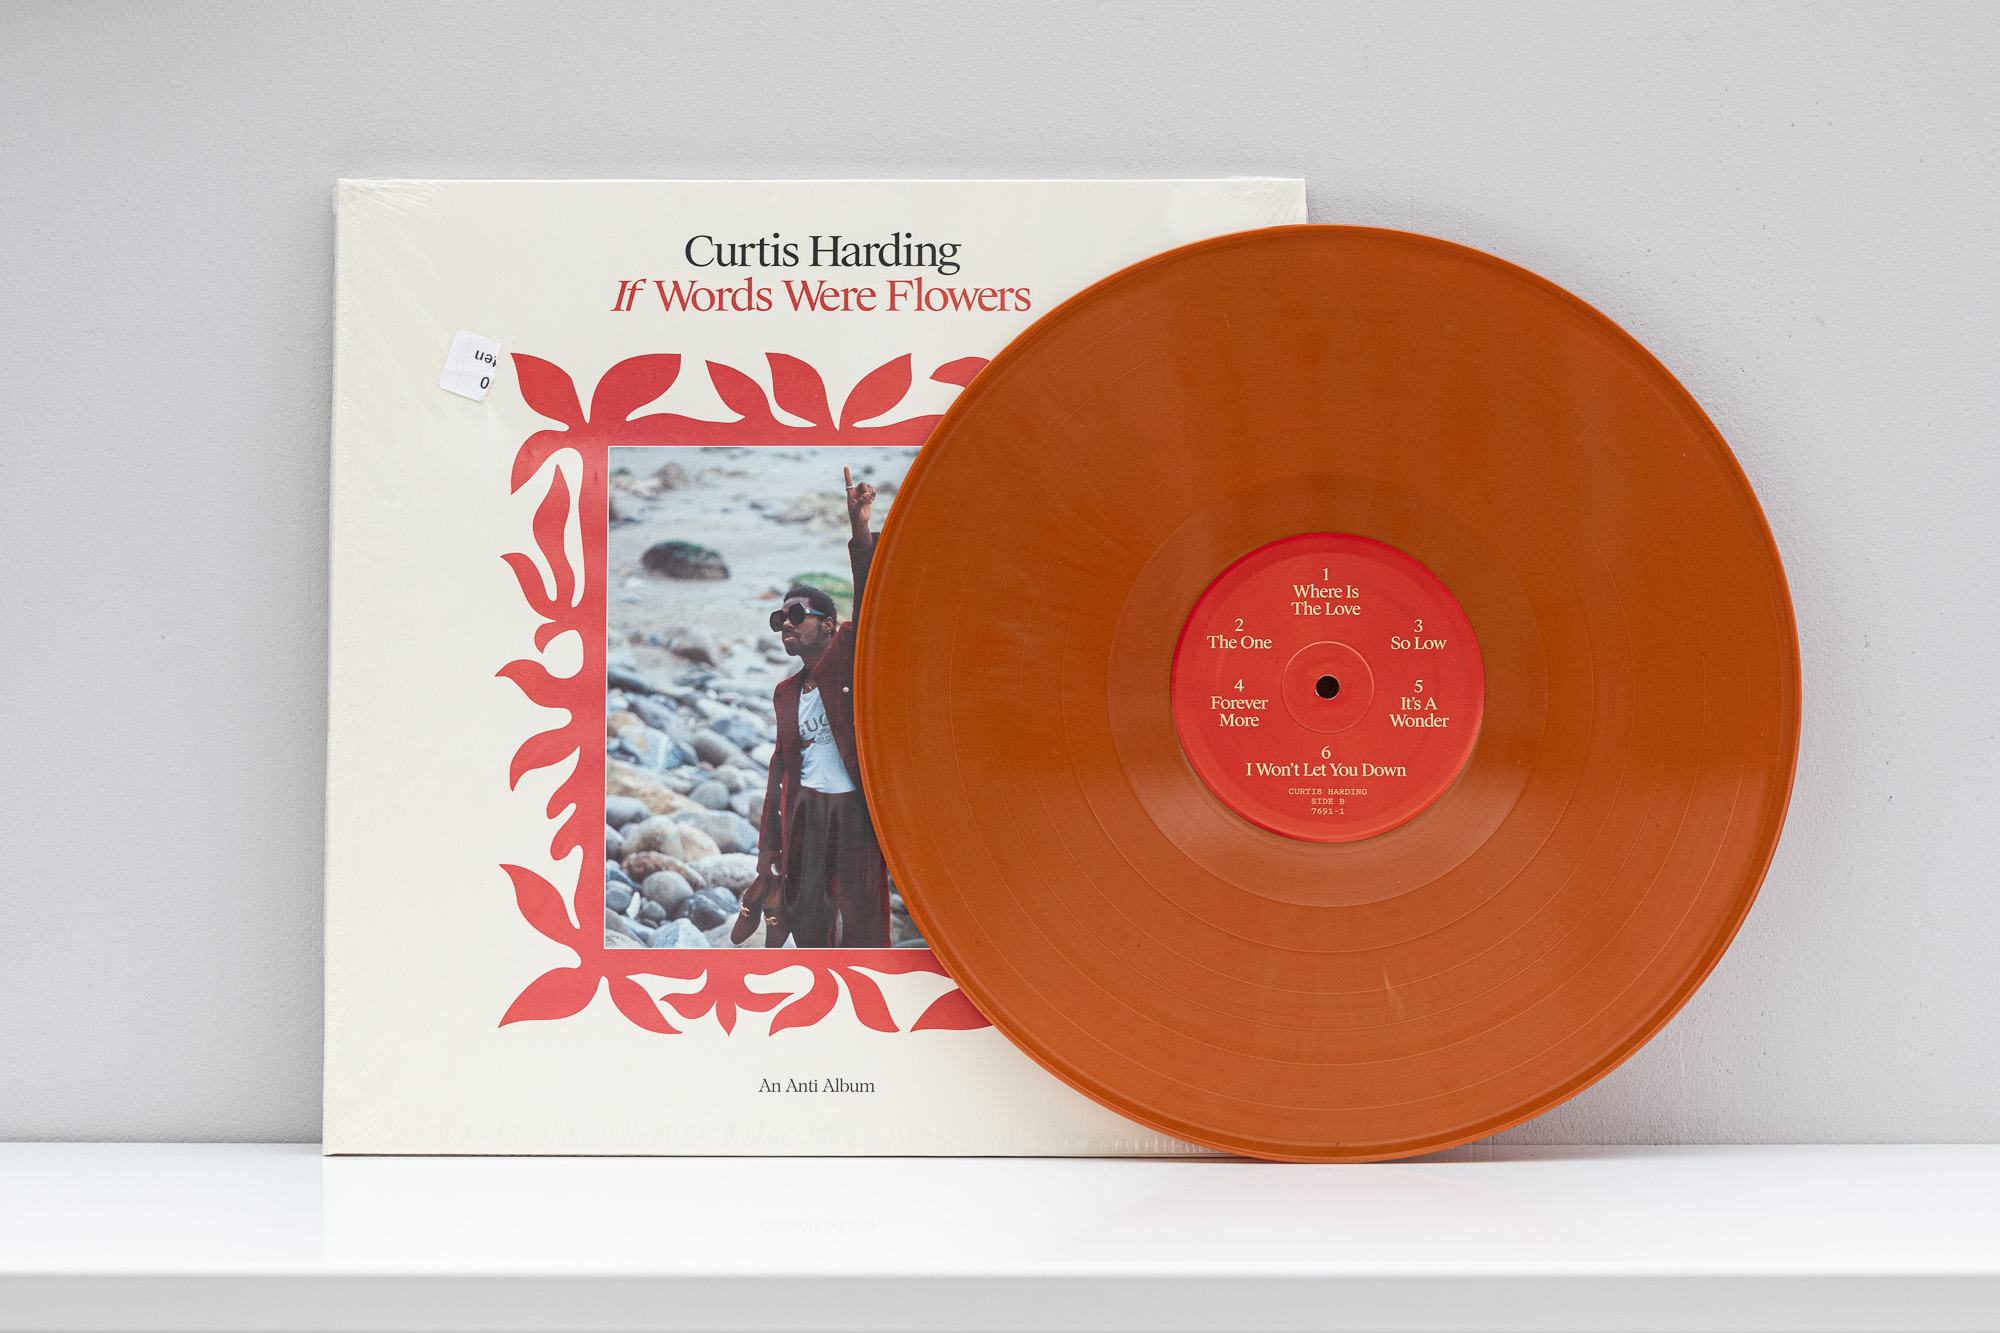 Curtis Harding – If Words Were Flowers – Limited Edition mit orange-roter Vinyl